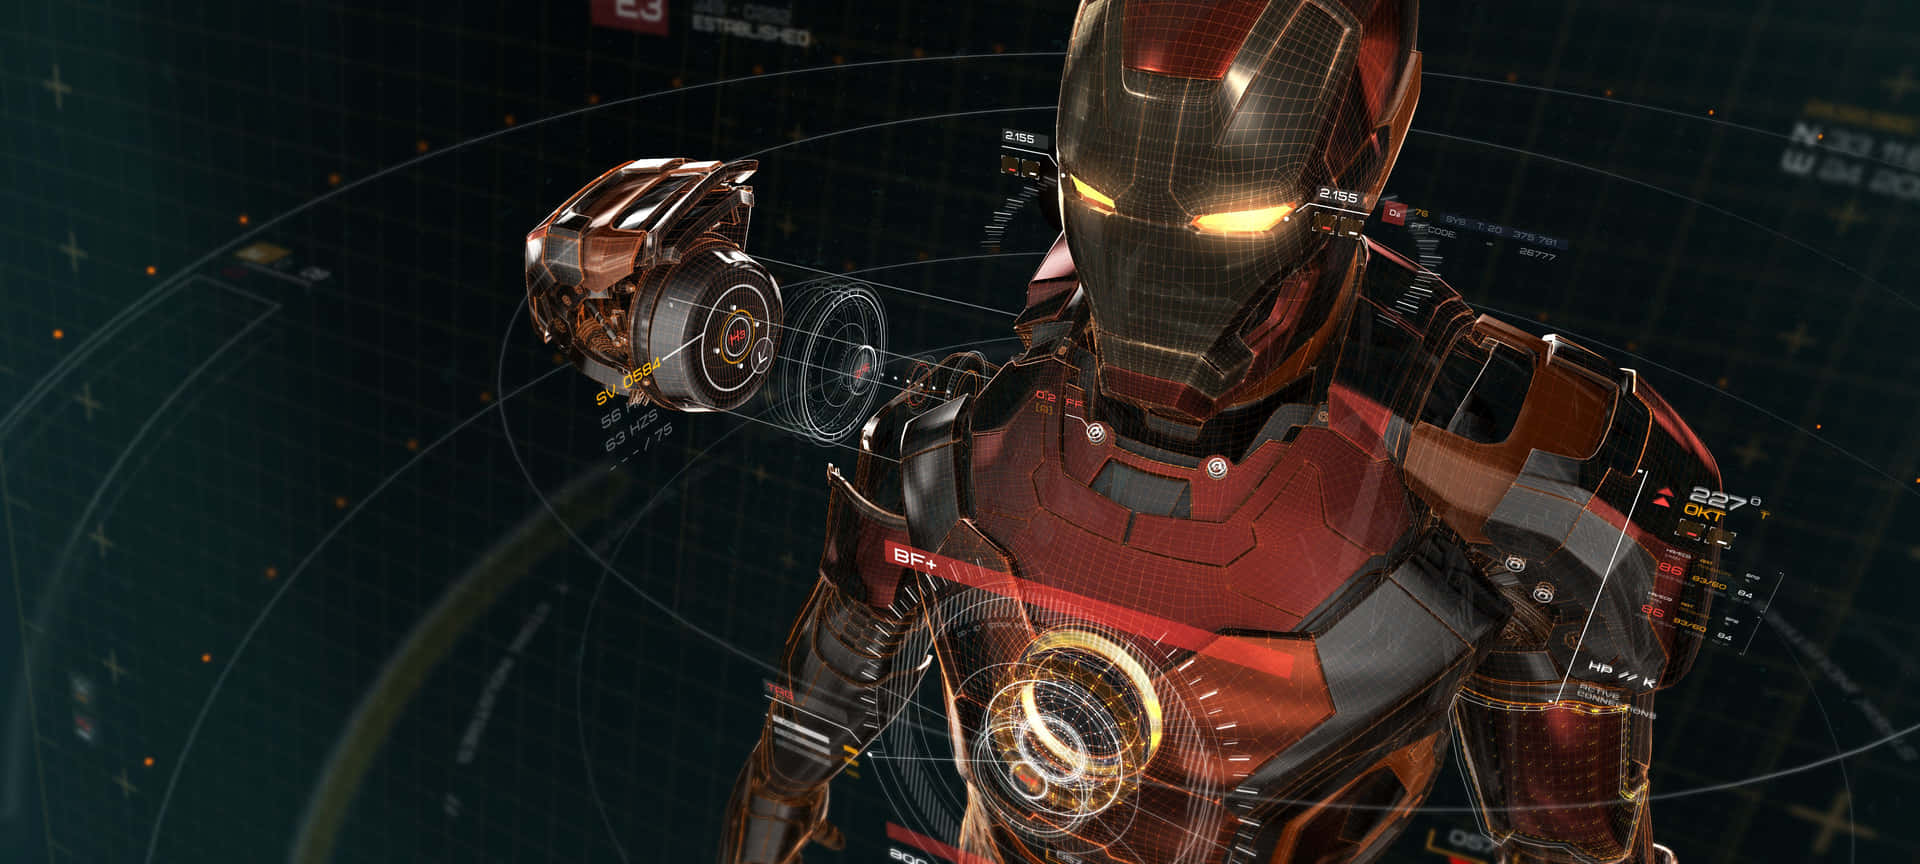 Tony Stark, også kendt som Iron Man. Wallpaper